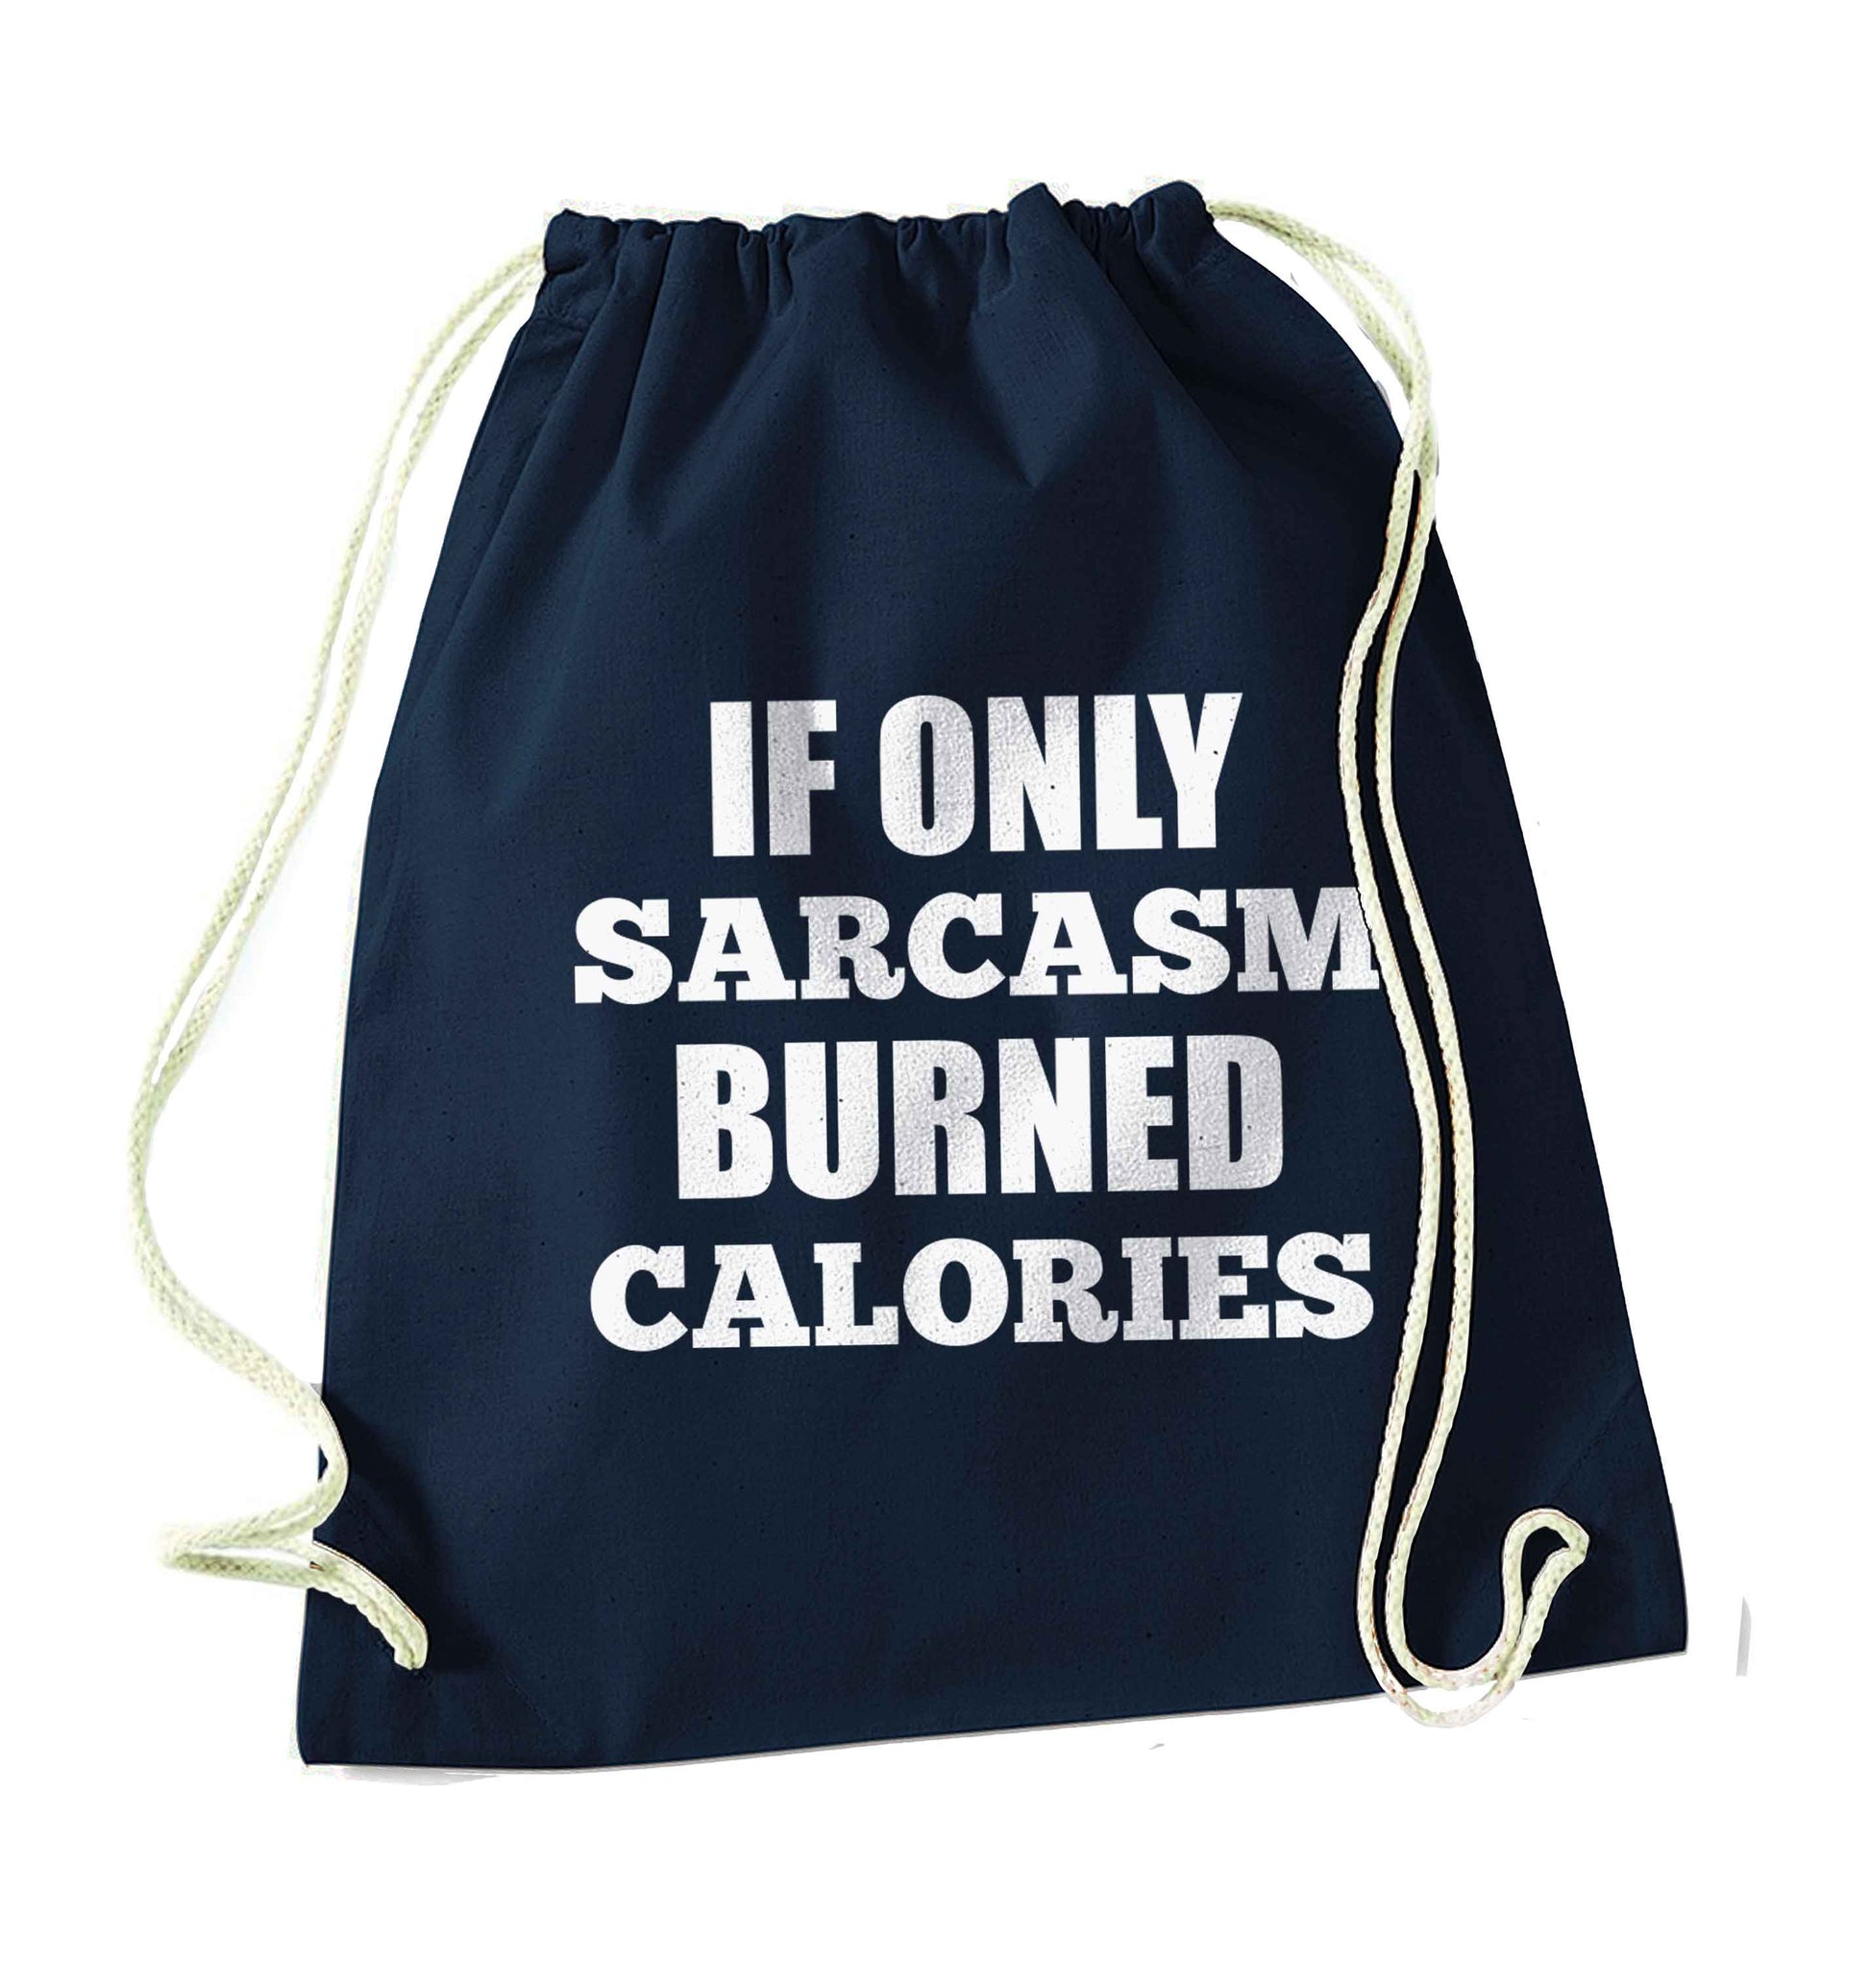 If only sarcasm burned calories navy drawstring bag